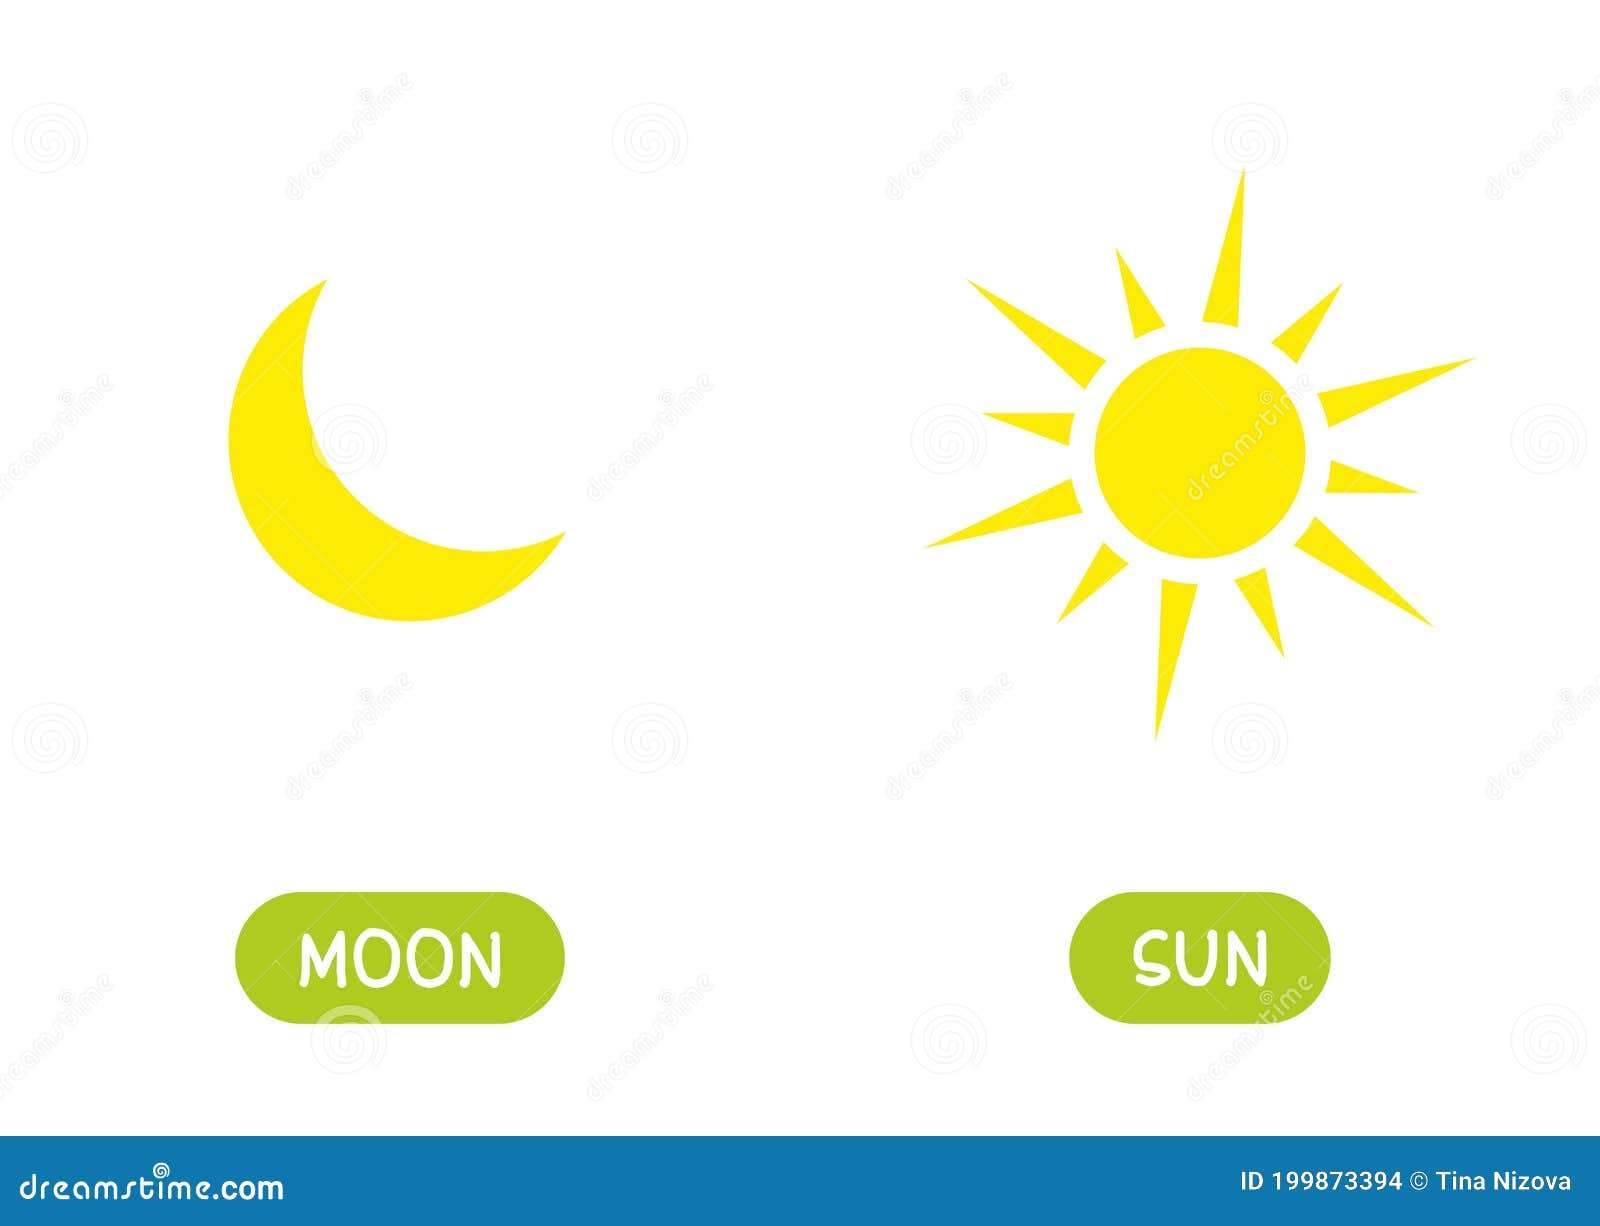 MOON and SUN Antonyms Word Card Vector Templat Stock Illustration ...